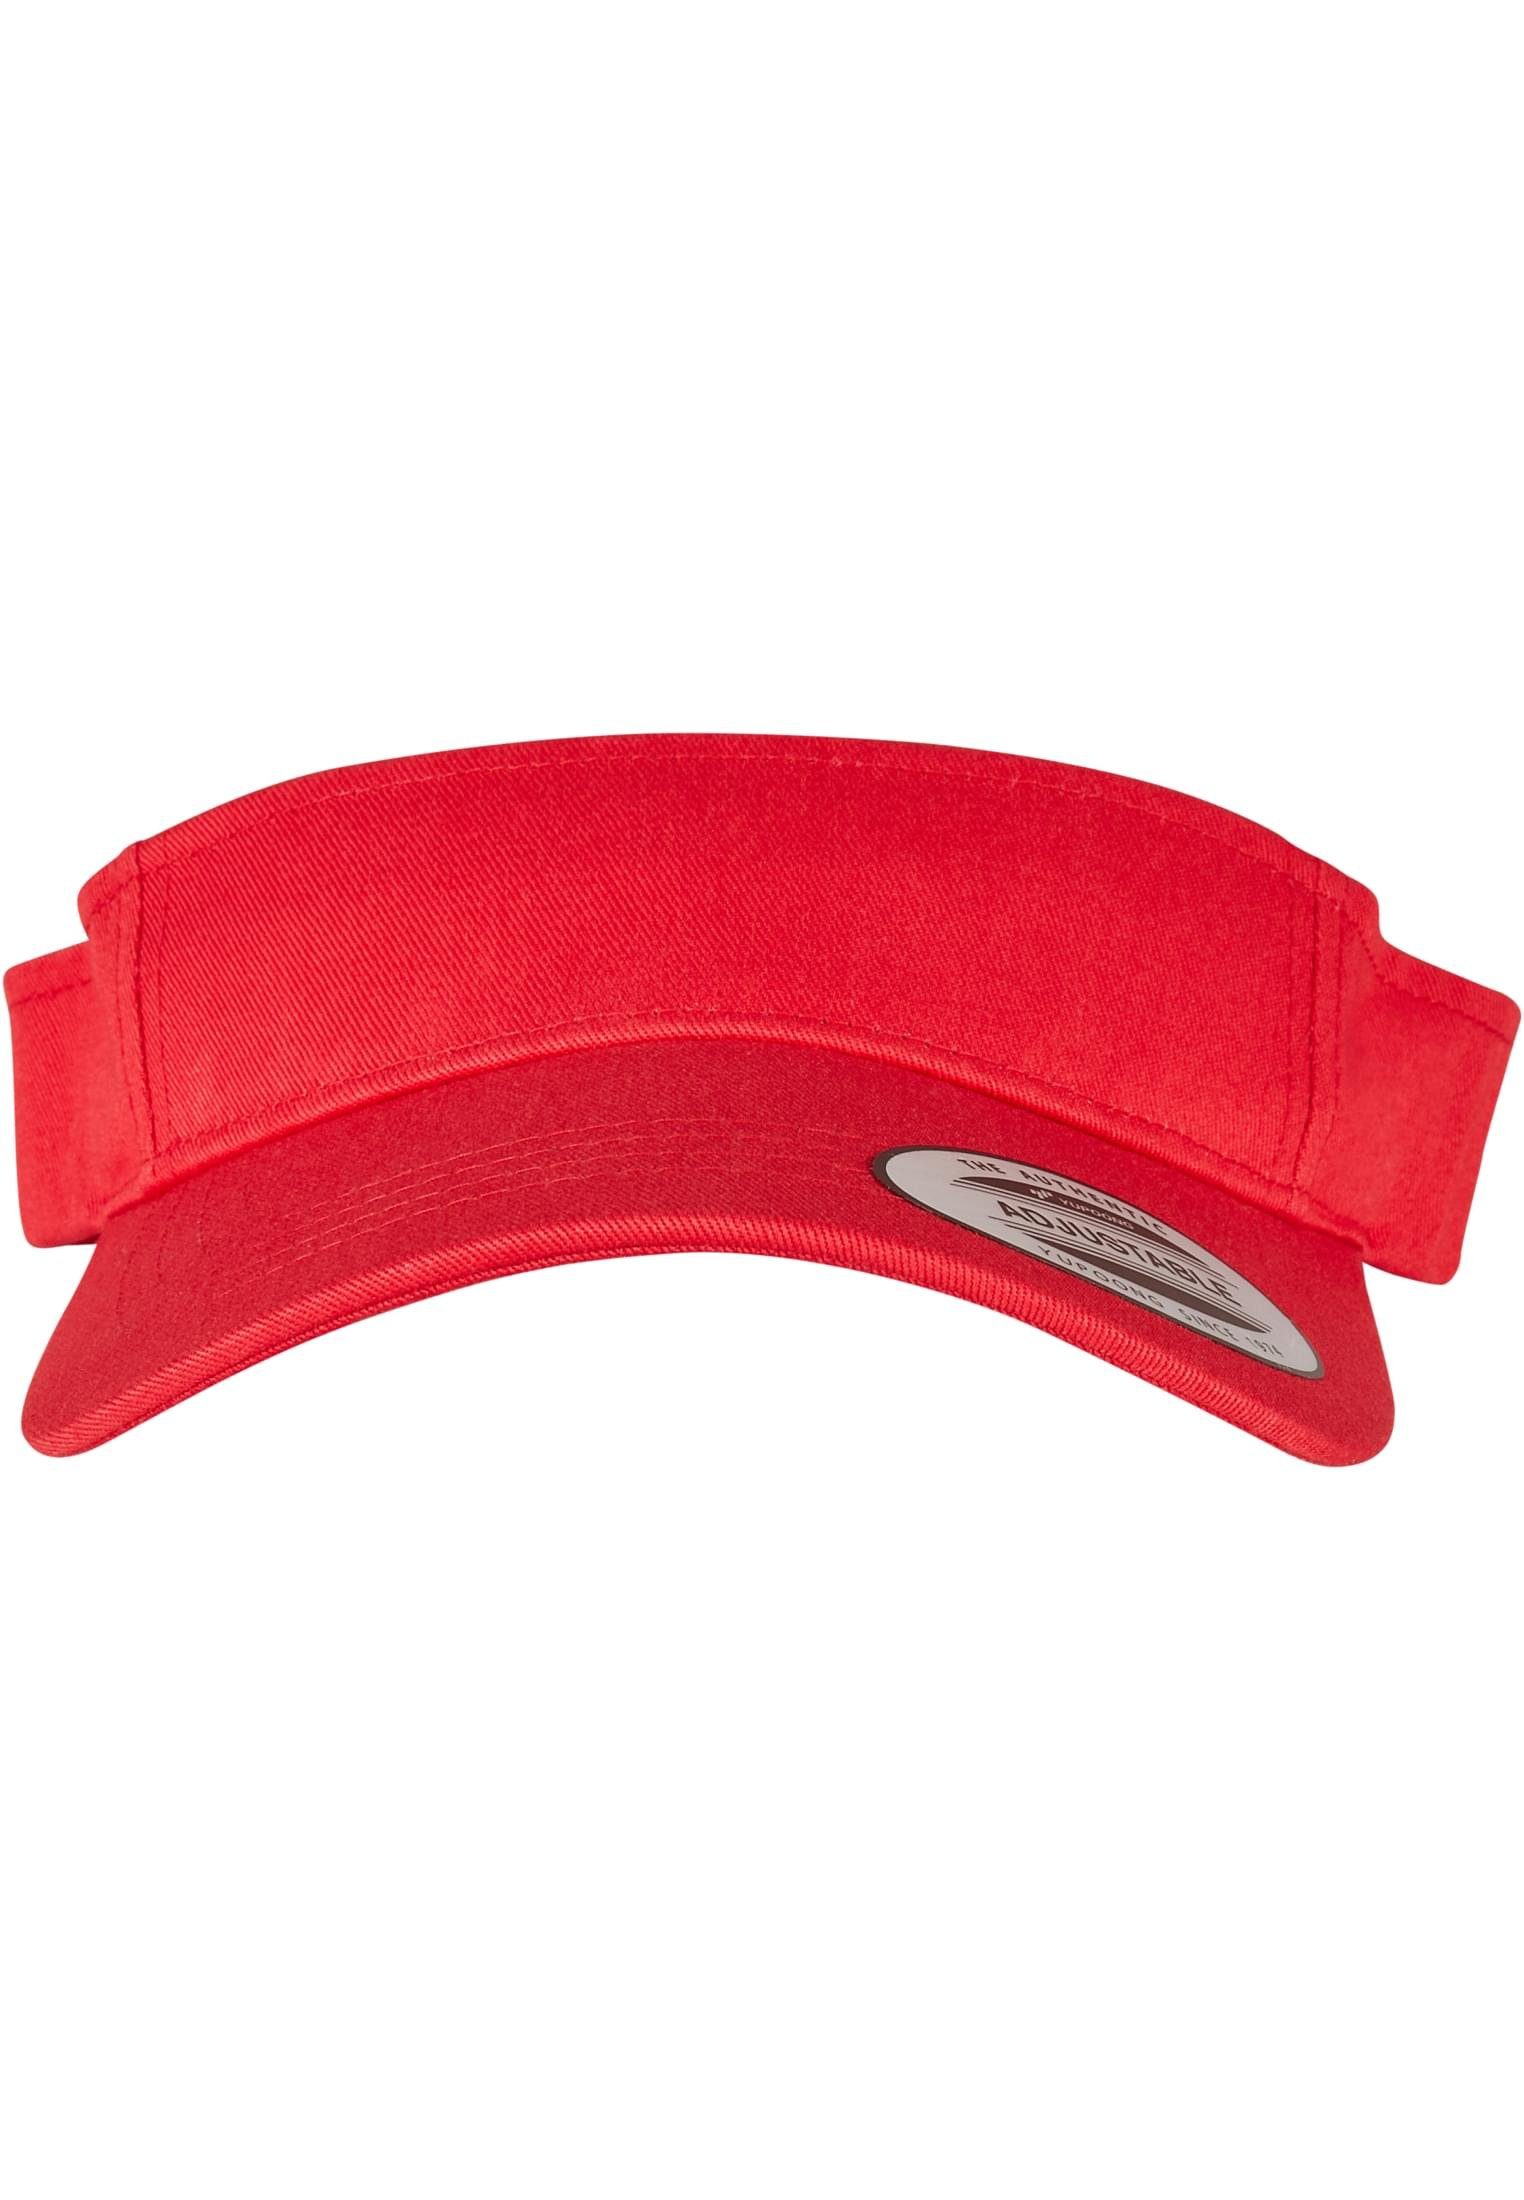 Accessoires red Cap Cap Curved Flexfit Visor Flex